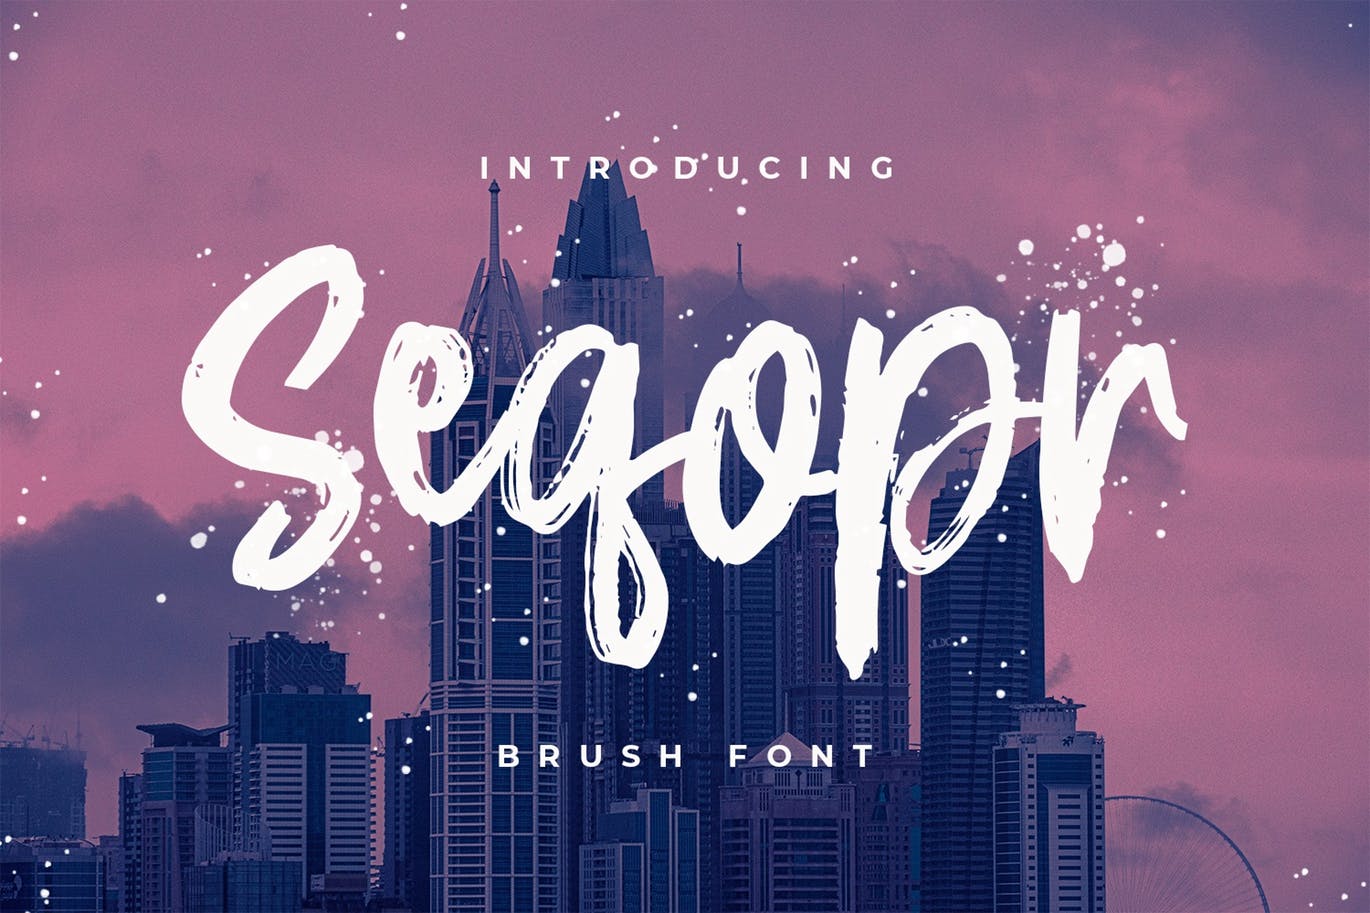 Logo/印刷设计英文笔刷字体素材天下精选 Seqopr – The Brush Font插图